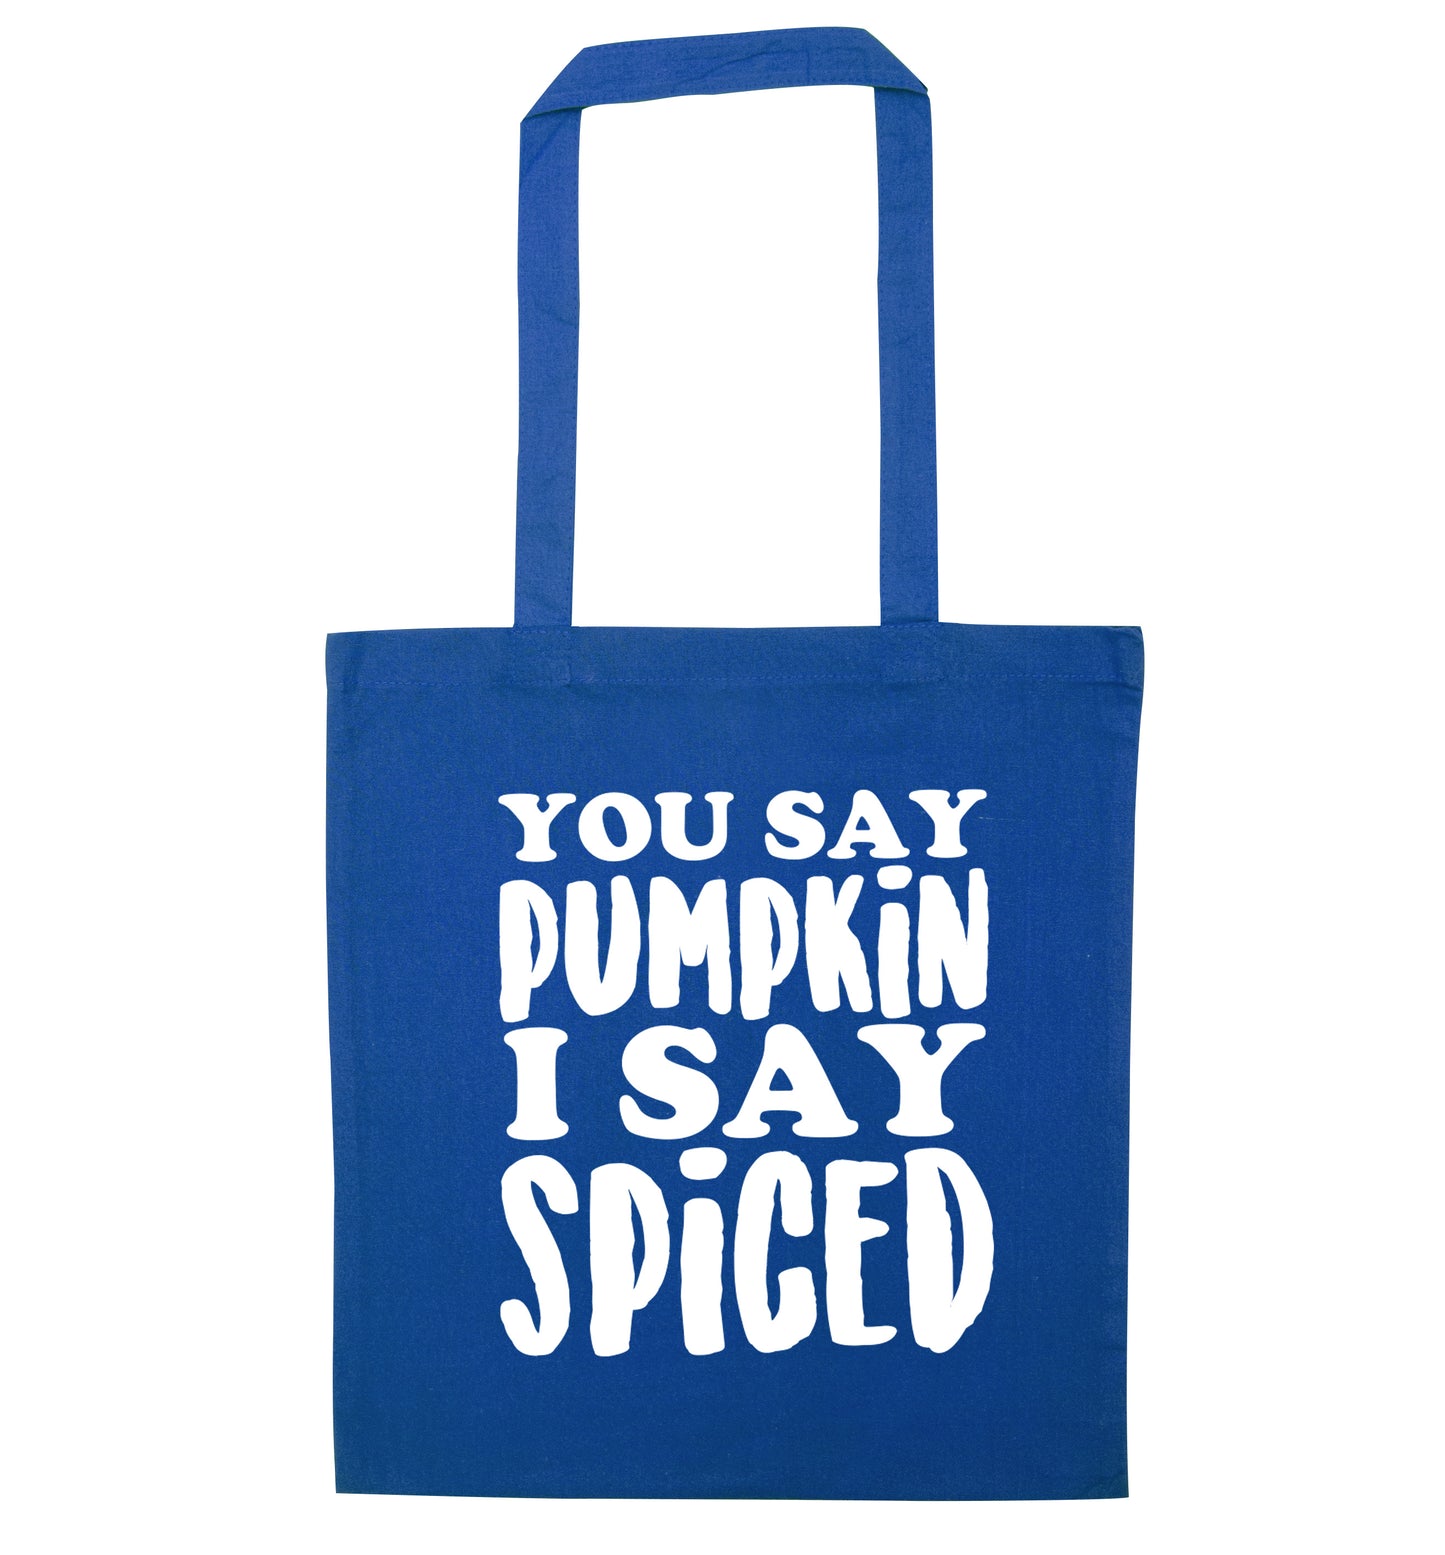 You say pumpkin I say spiced! blue tote bag